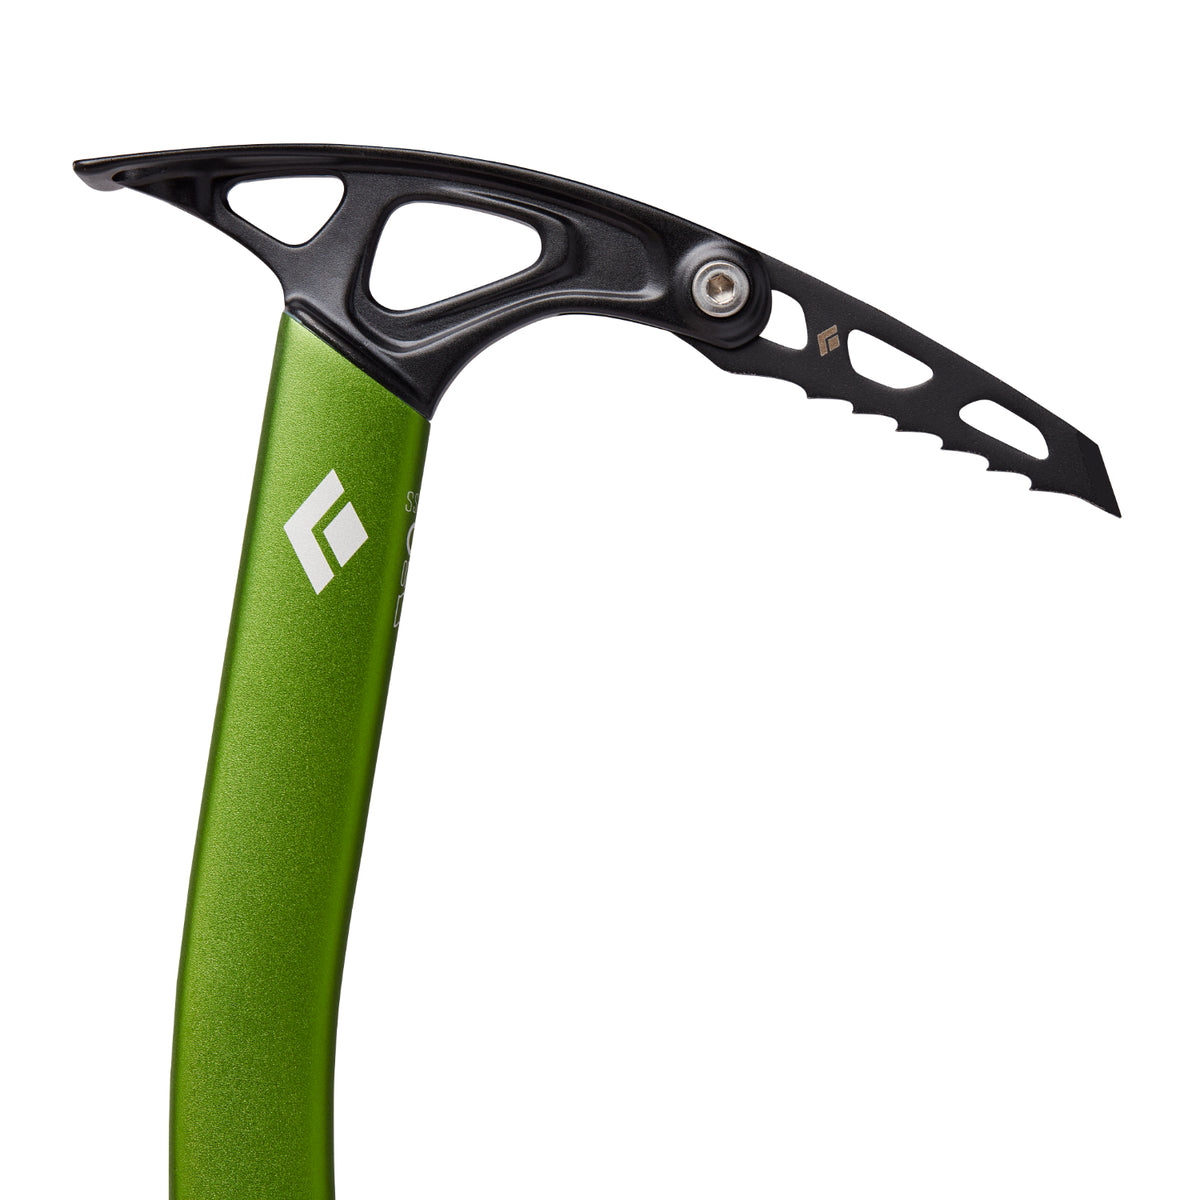 Black Diamond Venom LT Classic ice axe in green showing close up of head